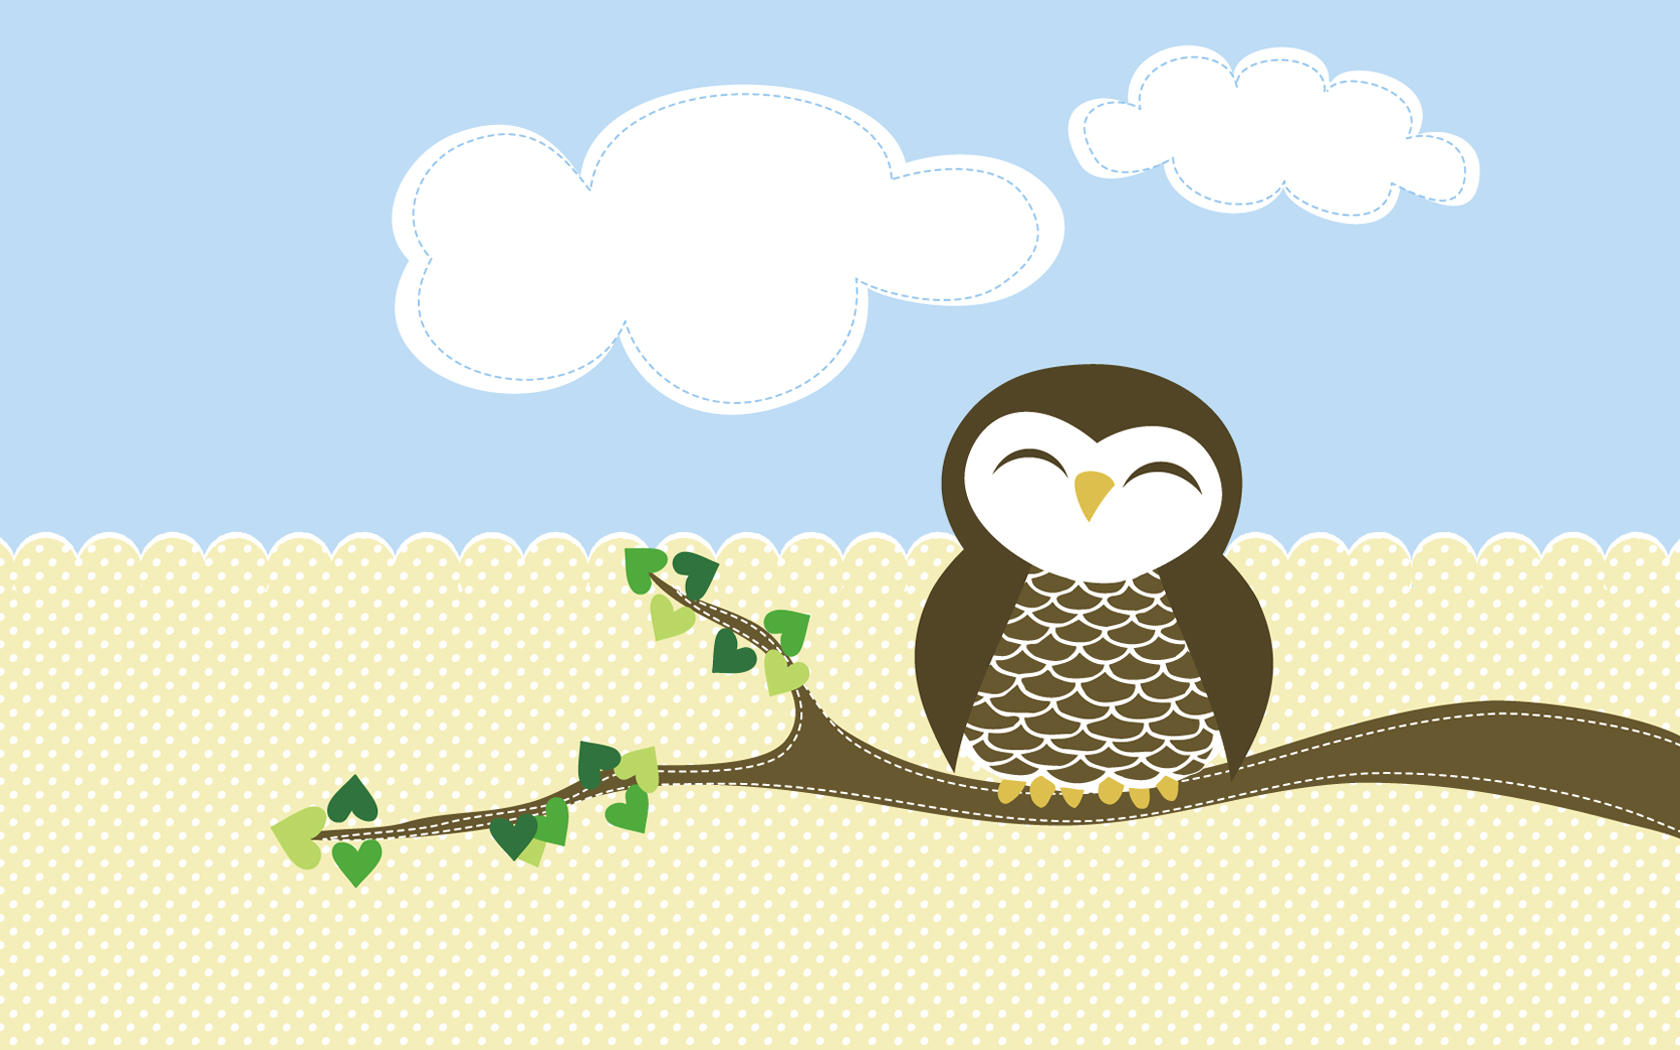 Cute Owl Wallpaper Desktop Images Pictures   Becuo